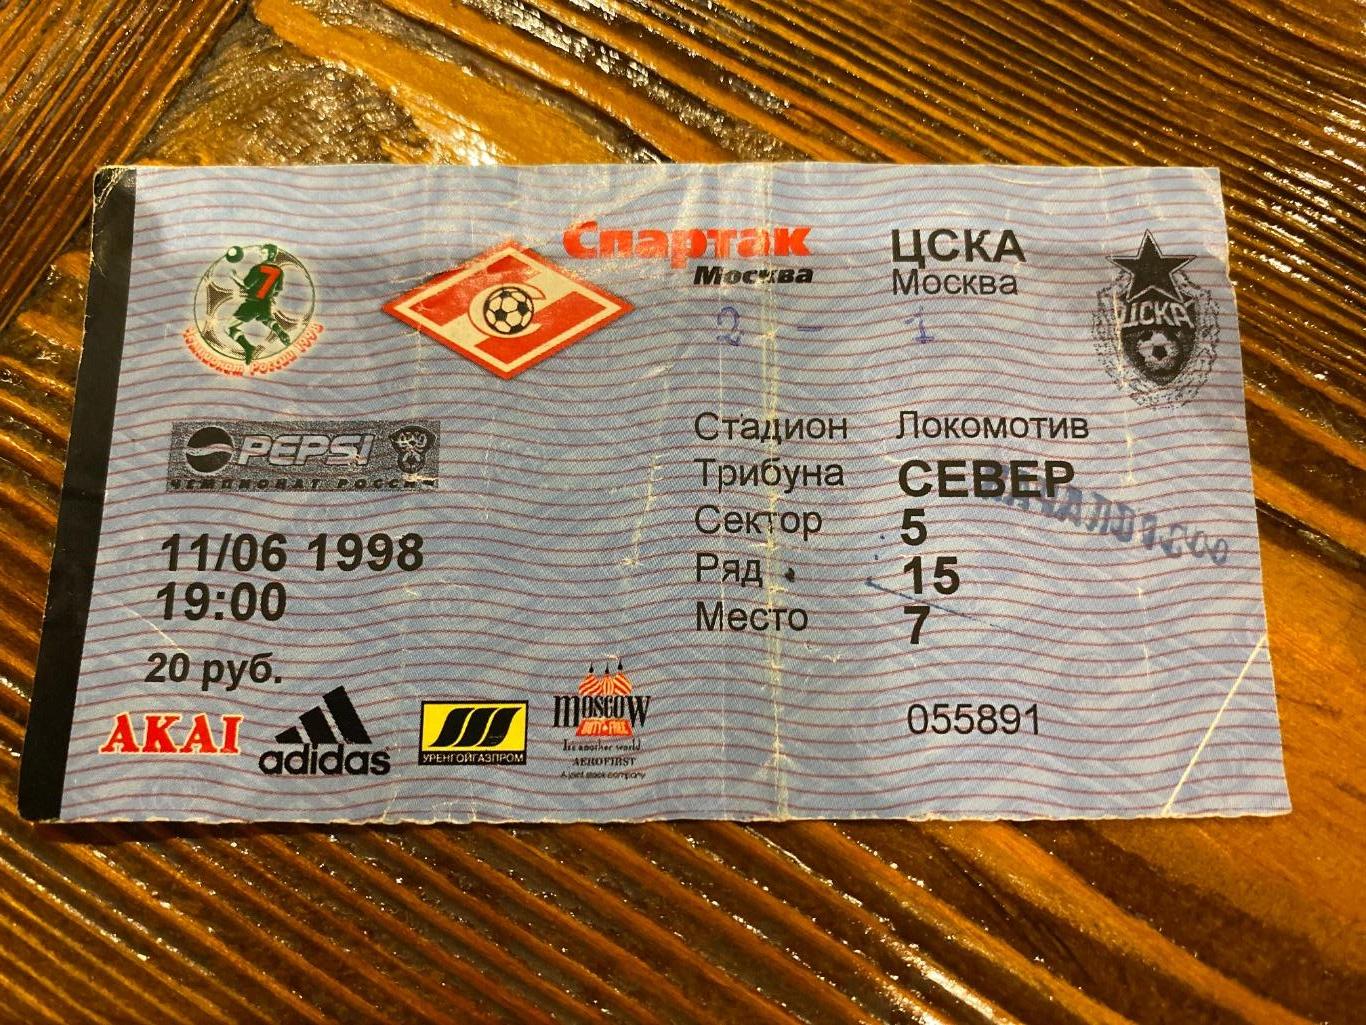 СПАРТАК Москва - ЦСКА Москва 11.06.1998 билет